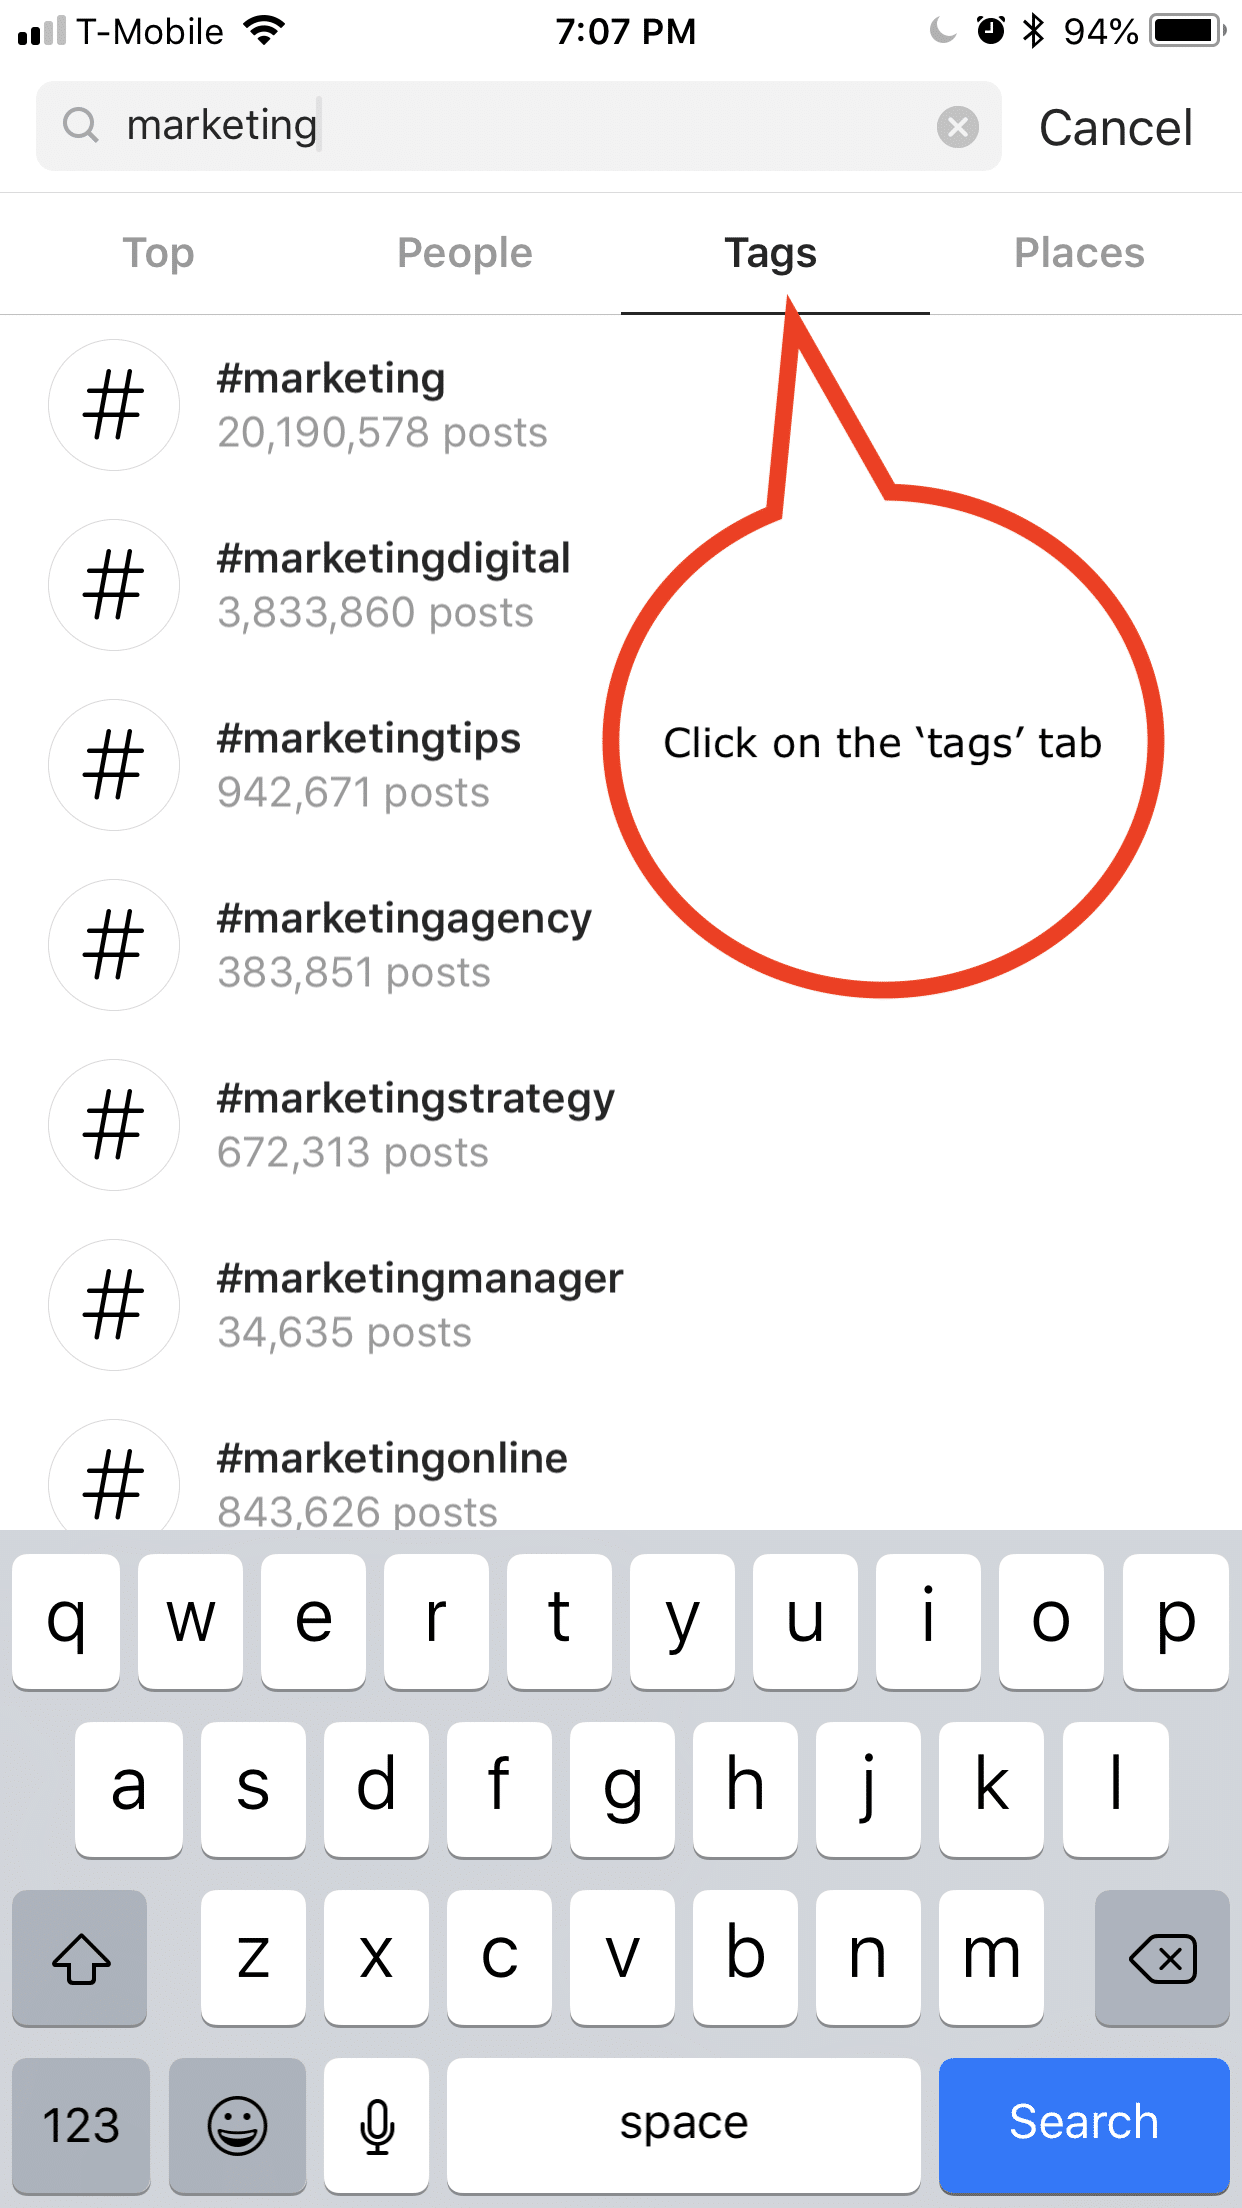 Marketing hashtag search